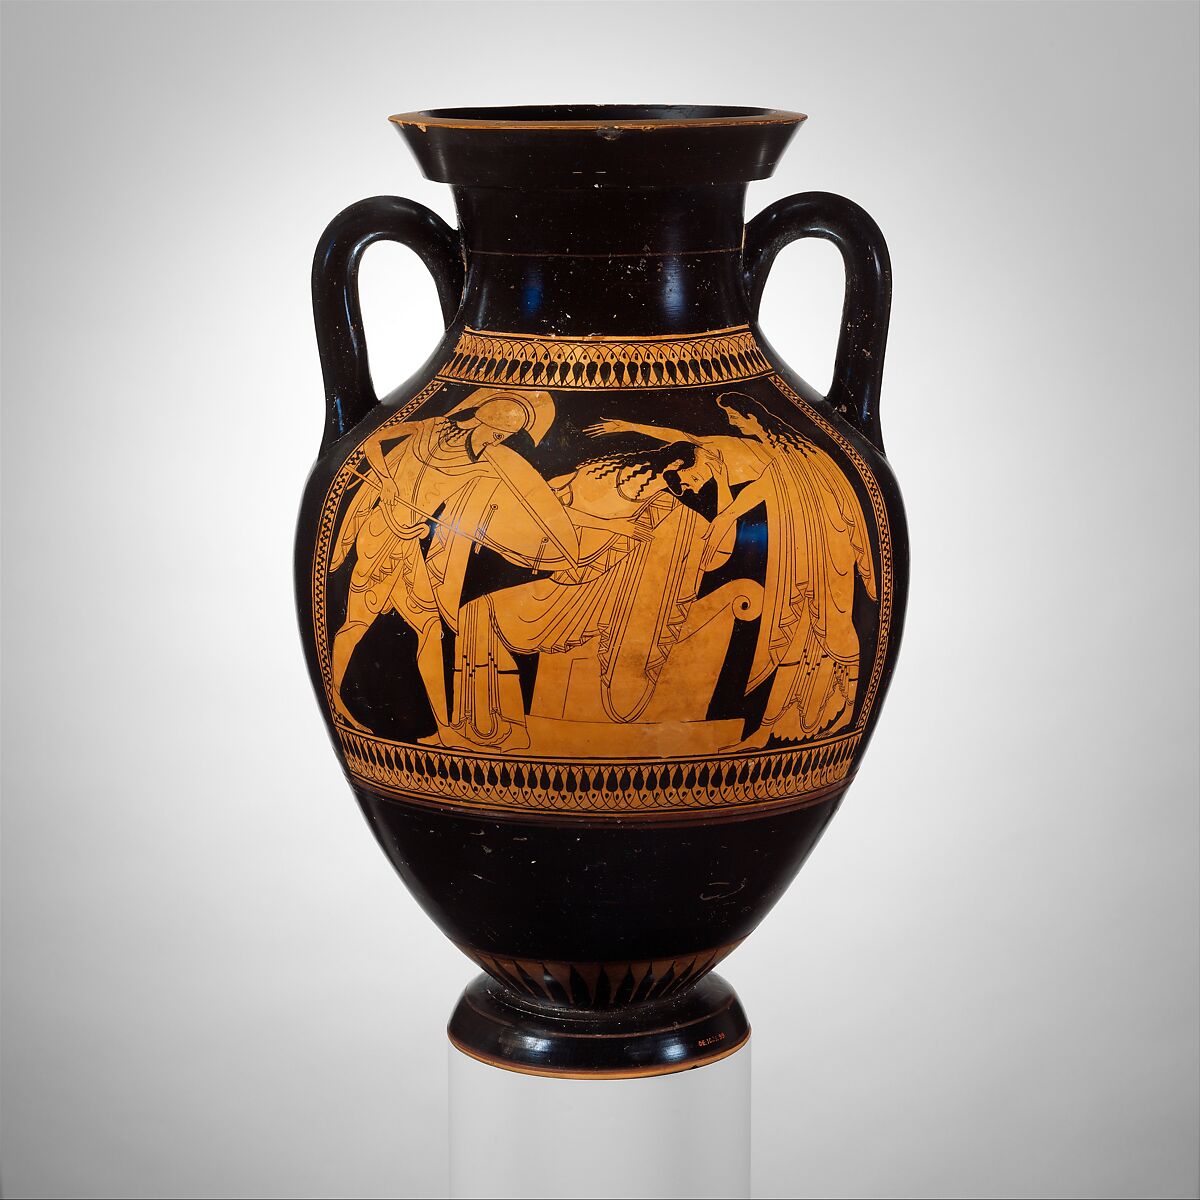 Terracotta amphora (jar), Attributed to the Nikoxenos Painter, Terracotta, Greek, Attic 